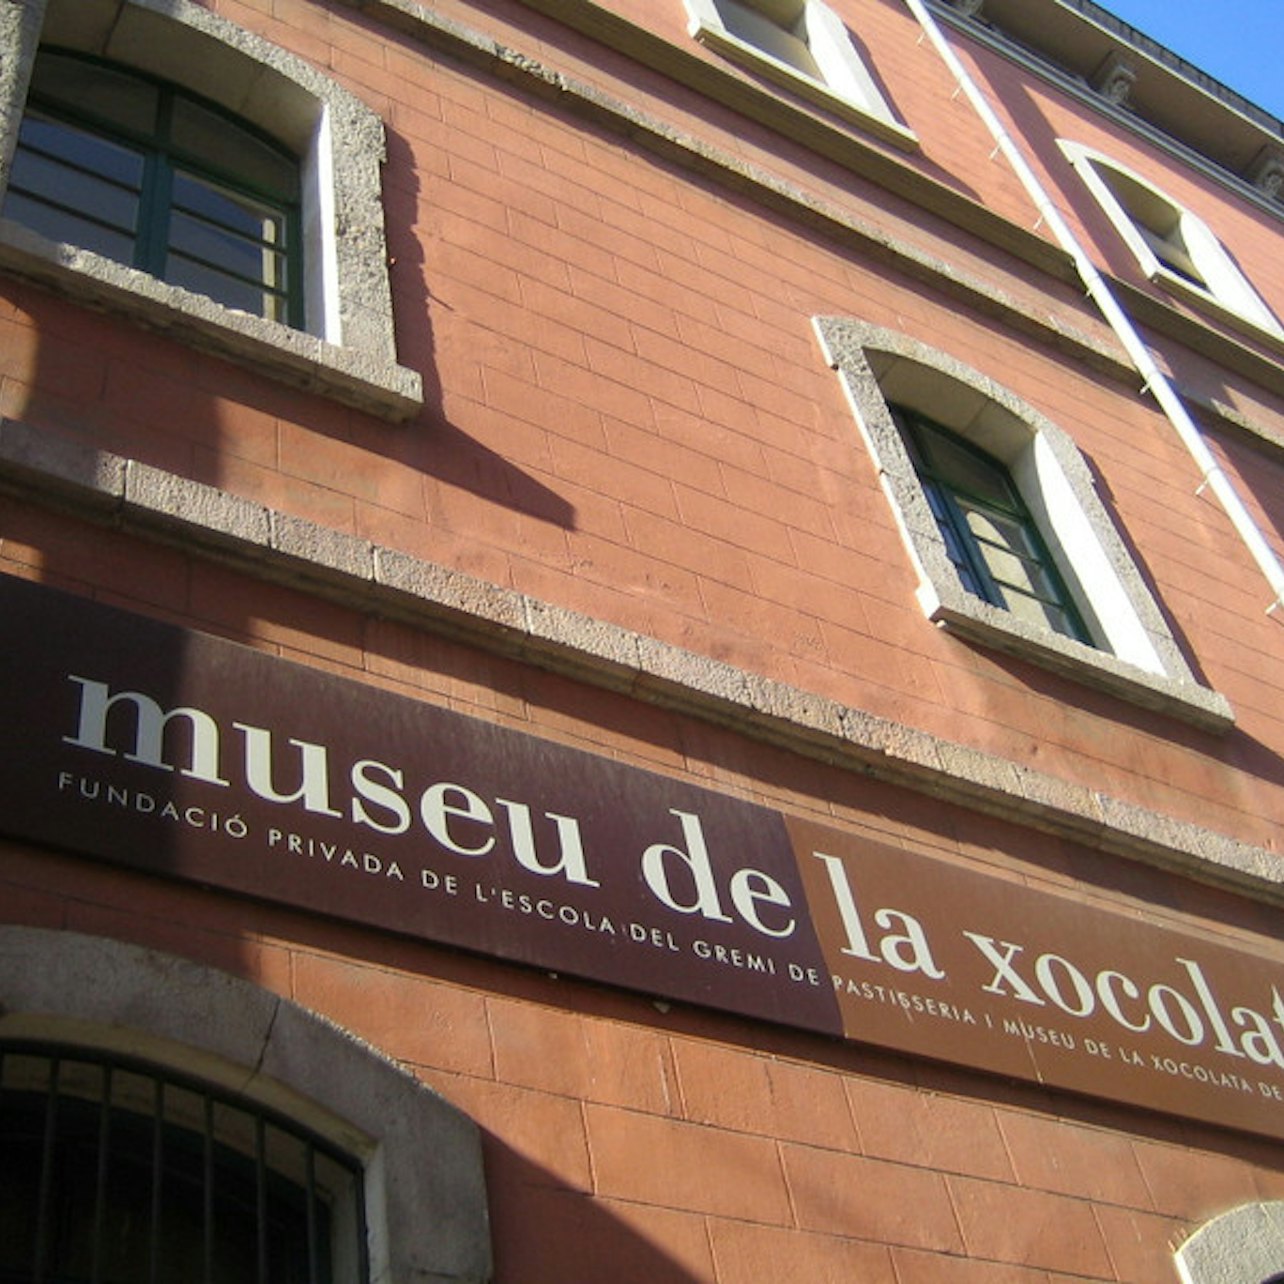 Chocolate Museum (Museu de la Xocolata de Barcelona) - Accommodations in Barcelona